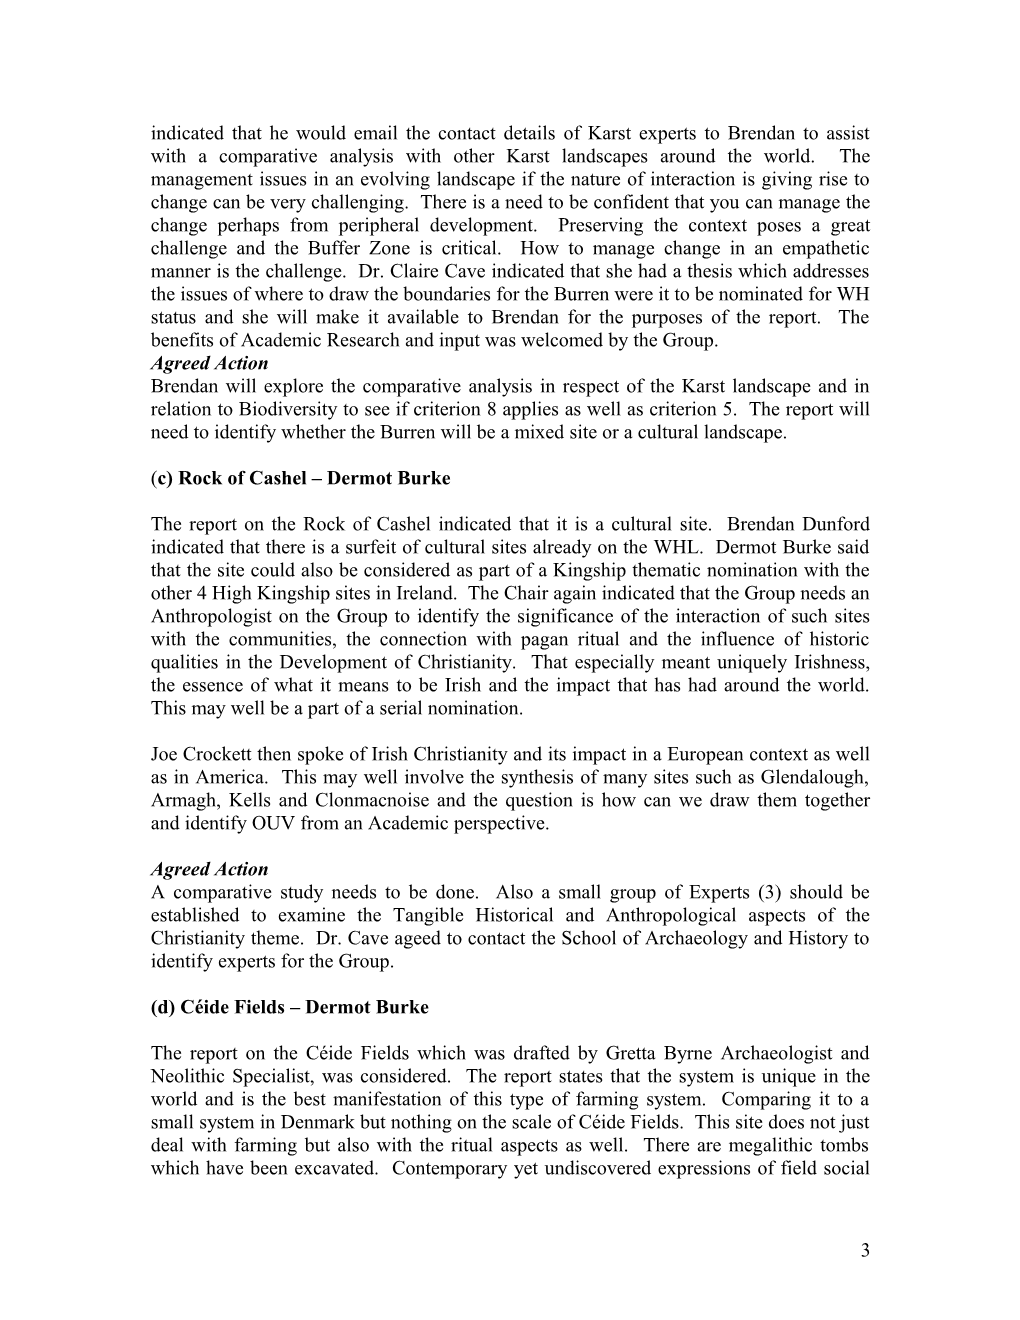 Minutes of Meeting of Tentative List Expert Advisory Group 14 November 2008